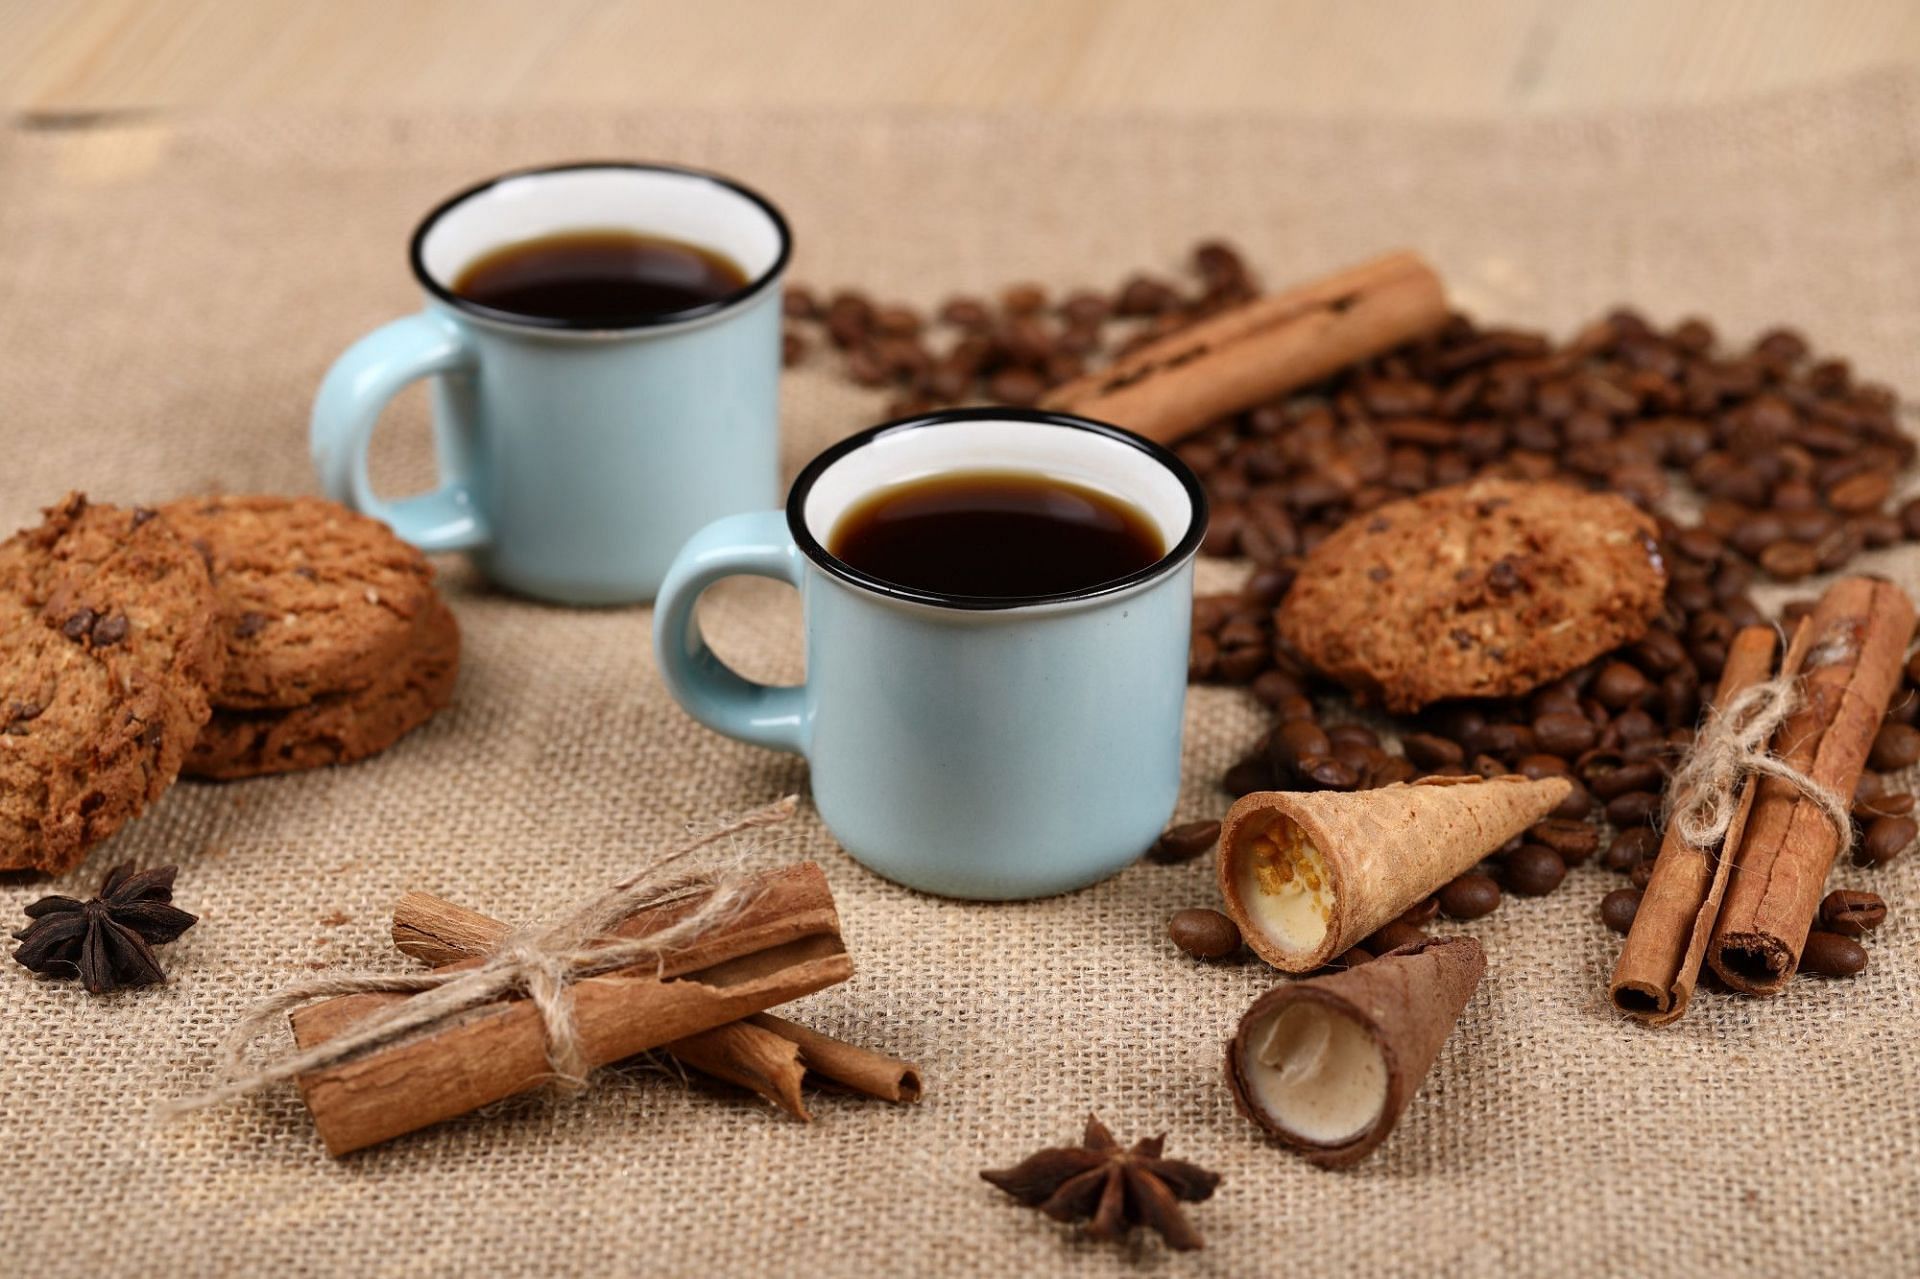 Cinnamon in black coffee decreases chronic stress related diseases (Image by azerbaijan_stockers on Freepik)